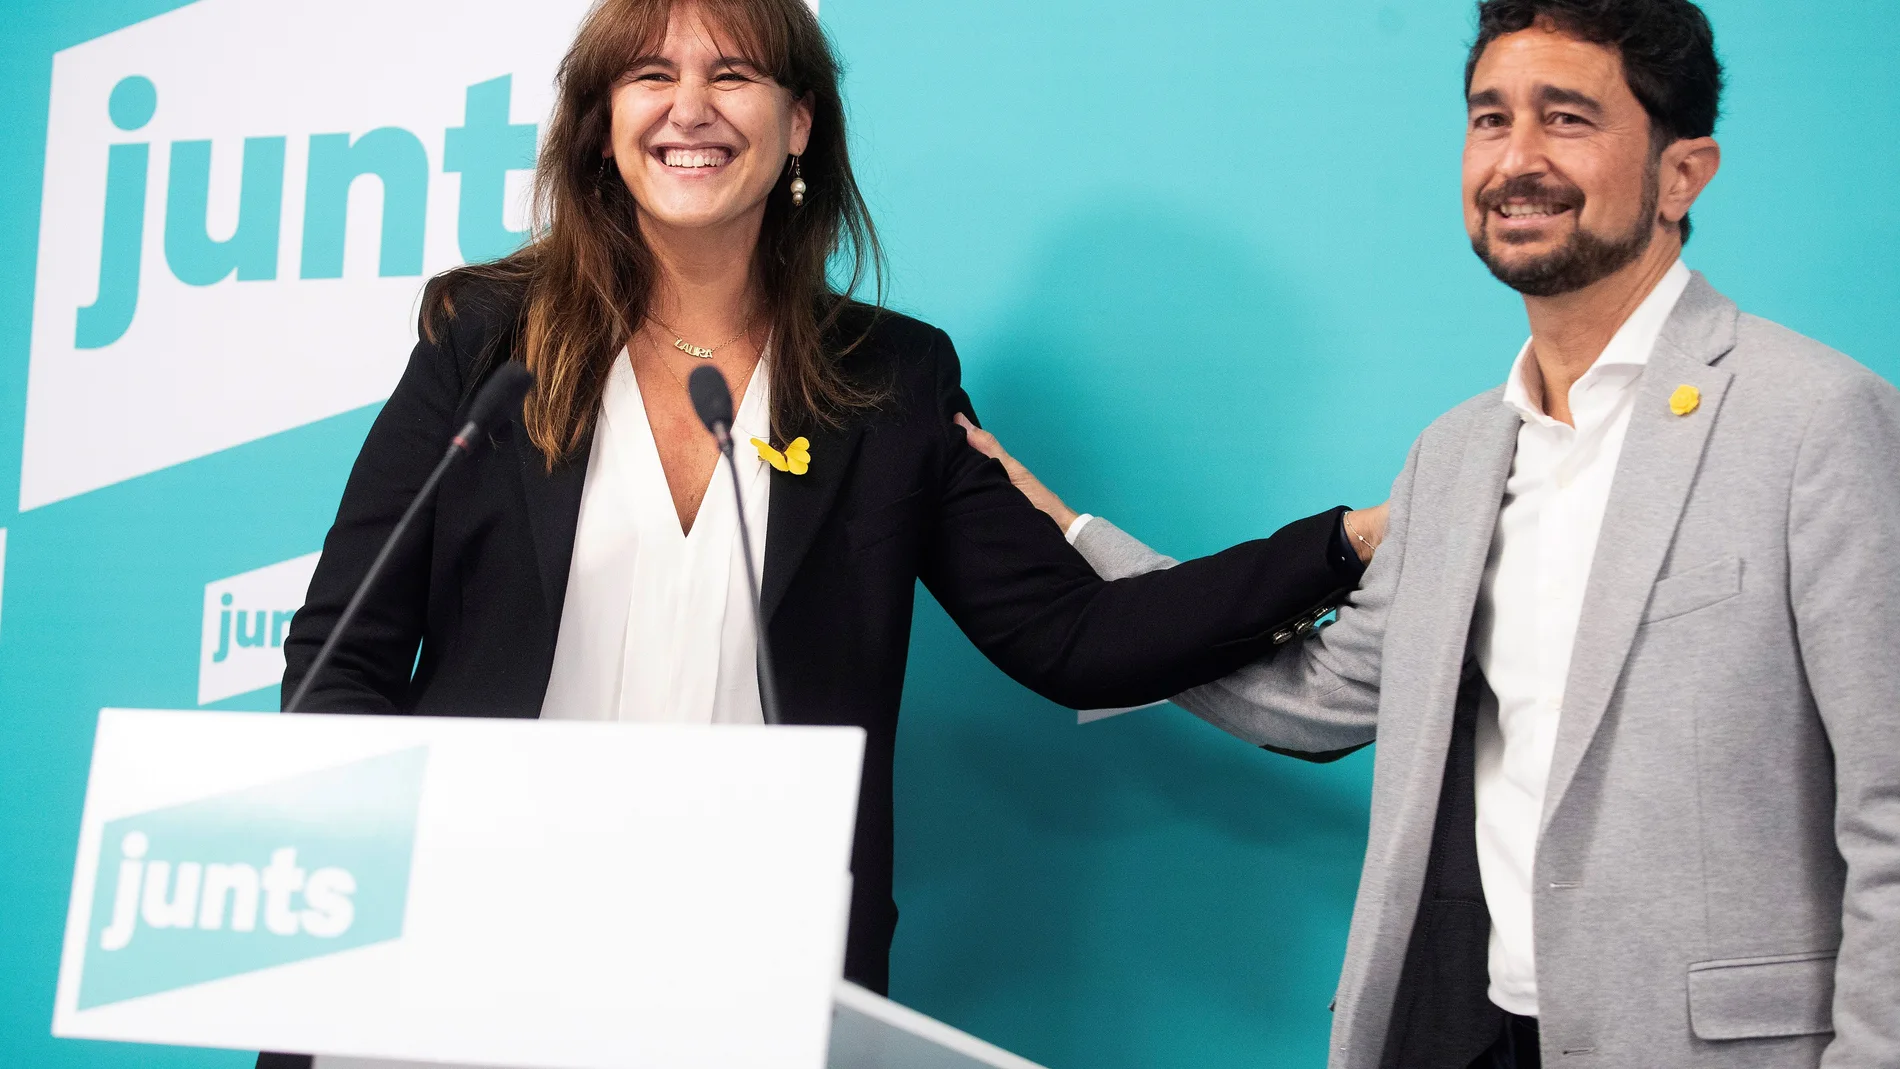 La diputada Laura Borràs ha sido elegida como candidata a la presidencia de la Generalitat en las elecciones previstas para el 14 de febrero de Junts per Catalunya